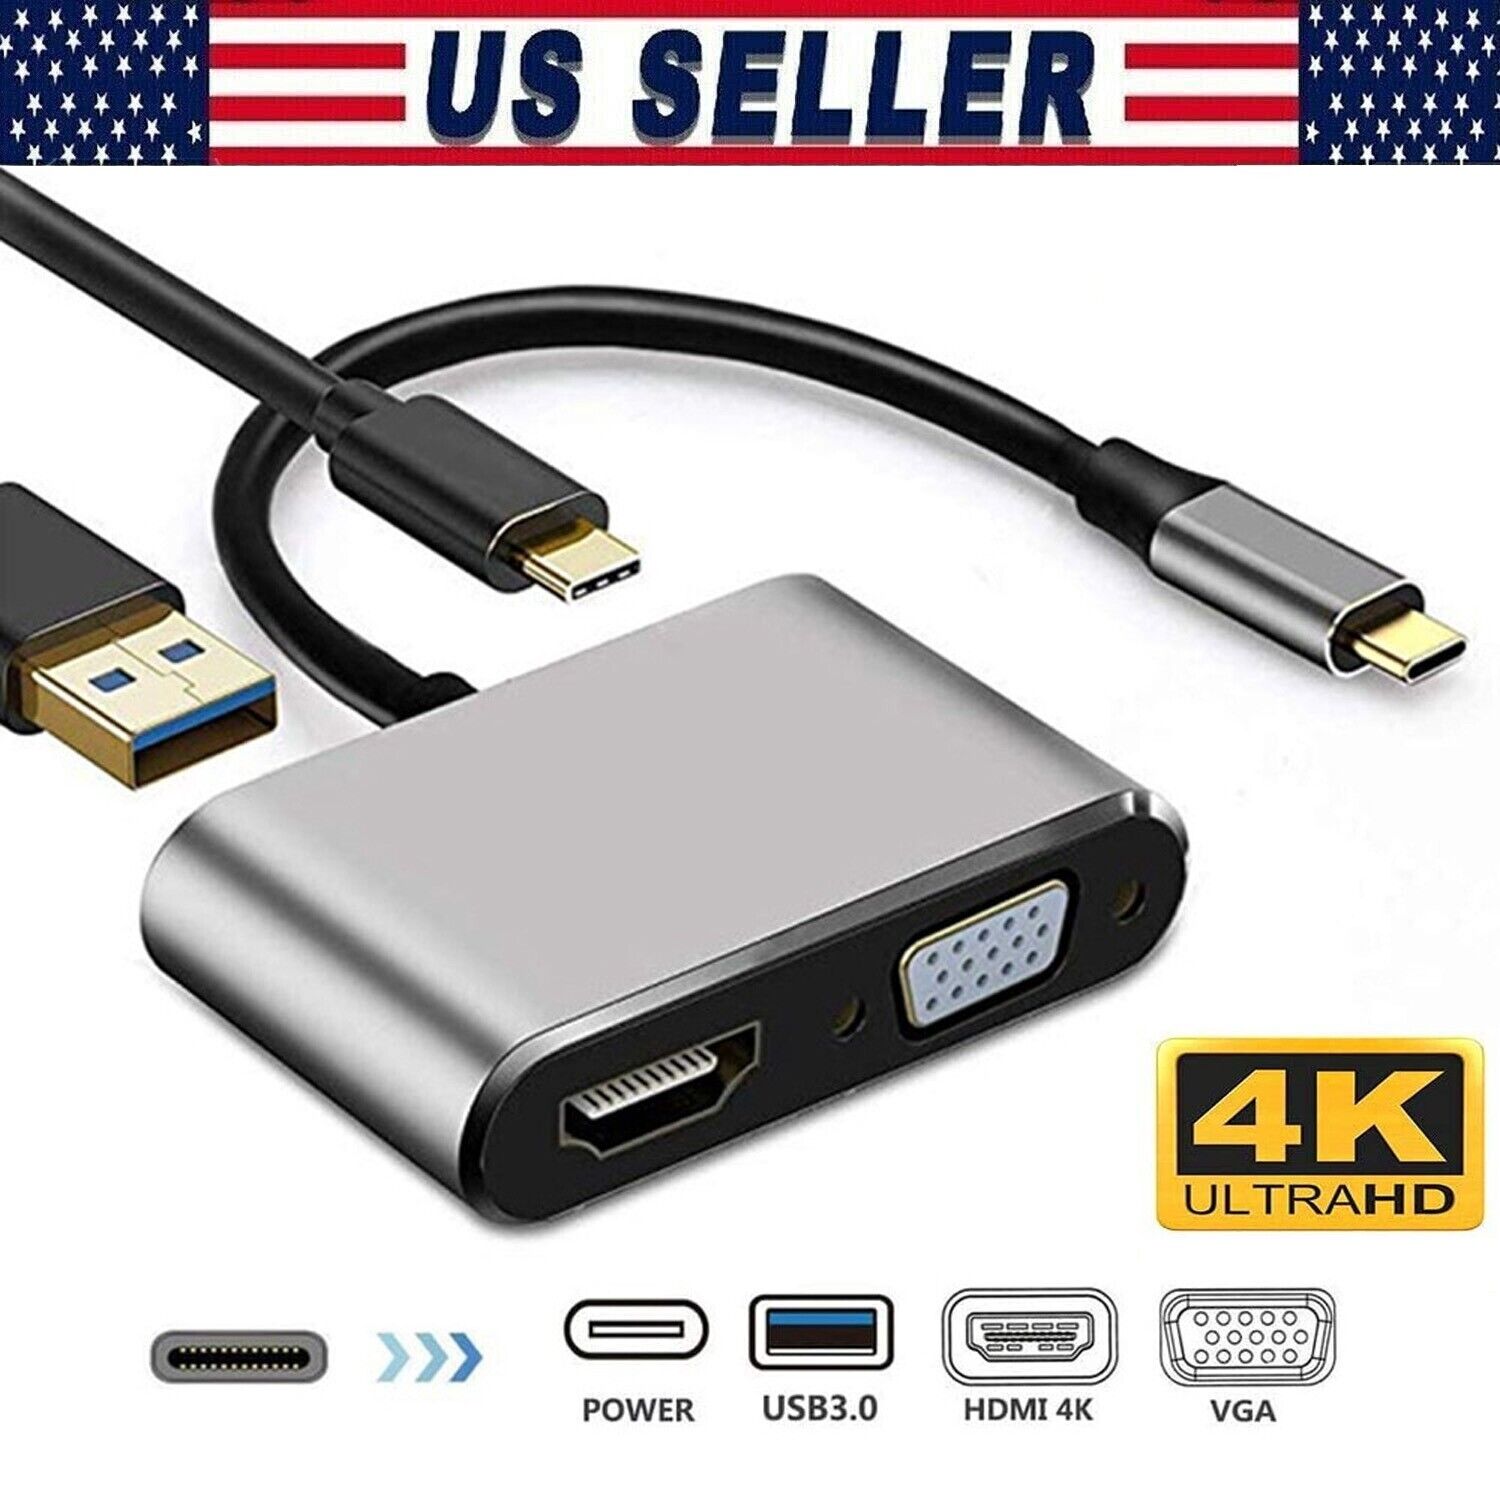 4 IN 1 USB C To HDMI 4K VGA Adapter USB 3.0 Type C to VGA HDMI Video Converter